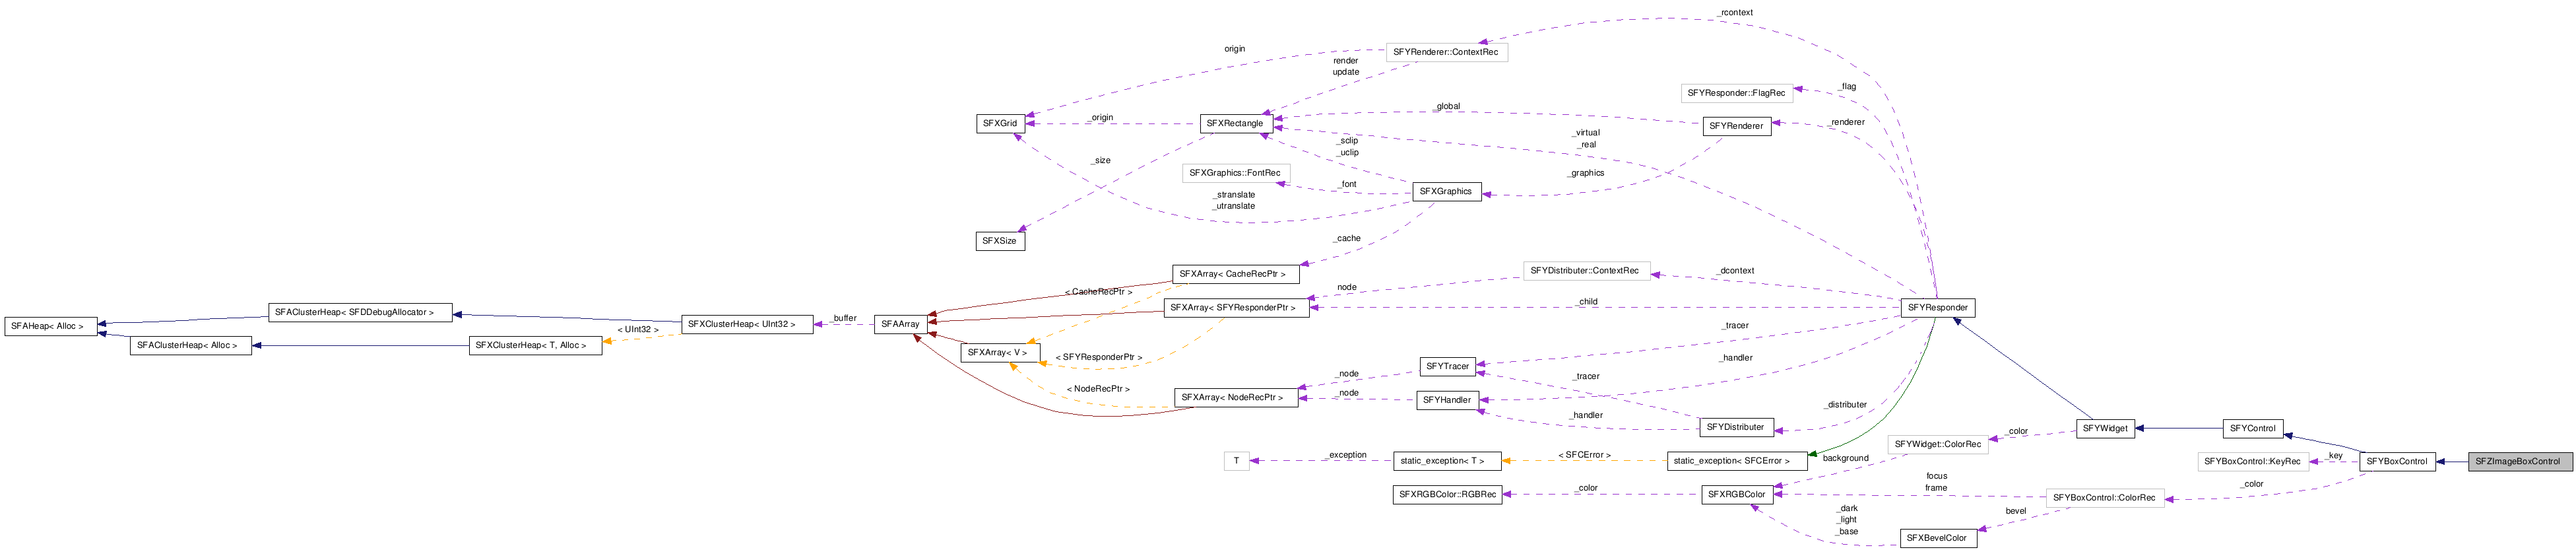  Collaboration diagram of SFZImageBoxControlClass